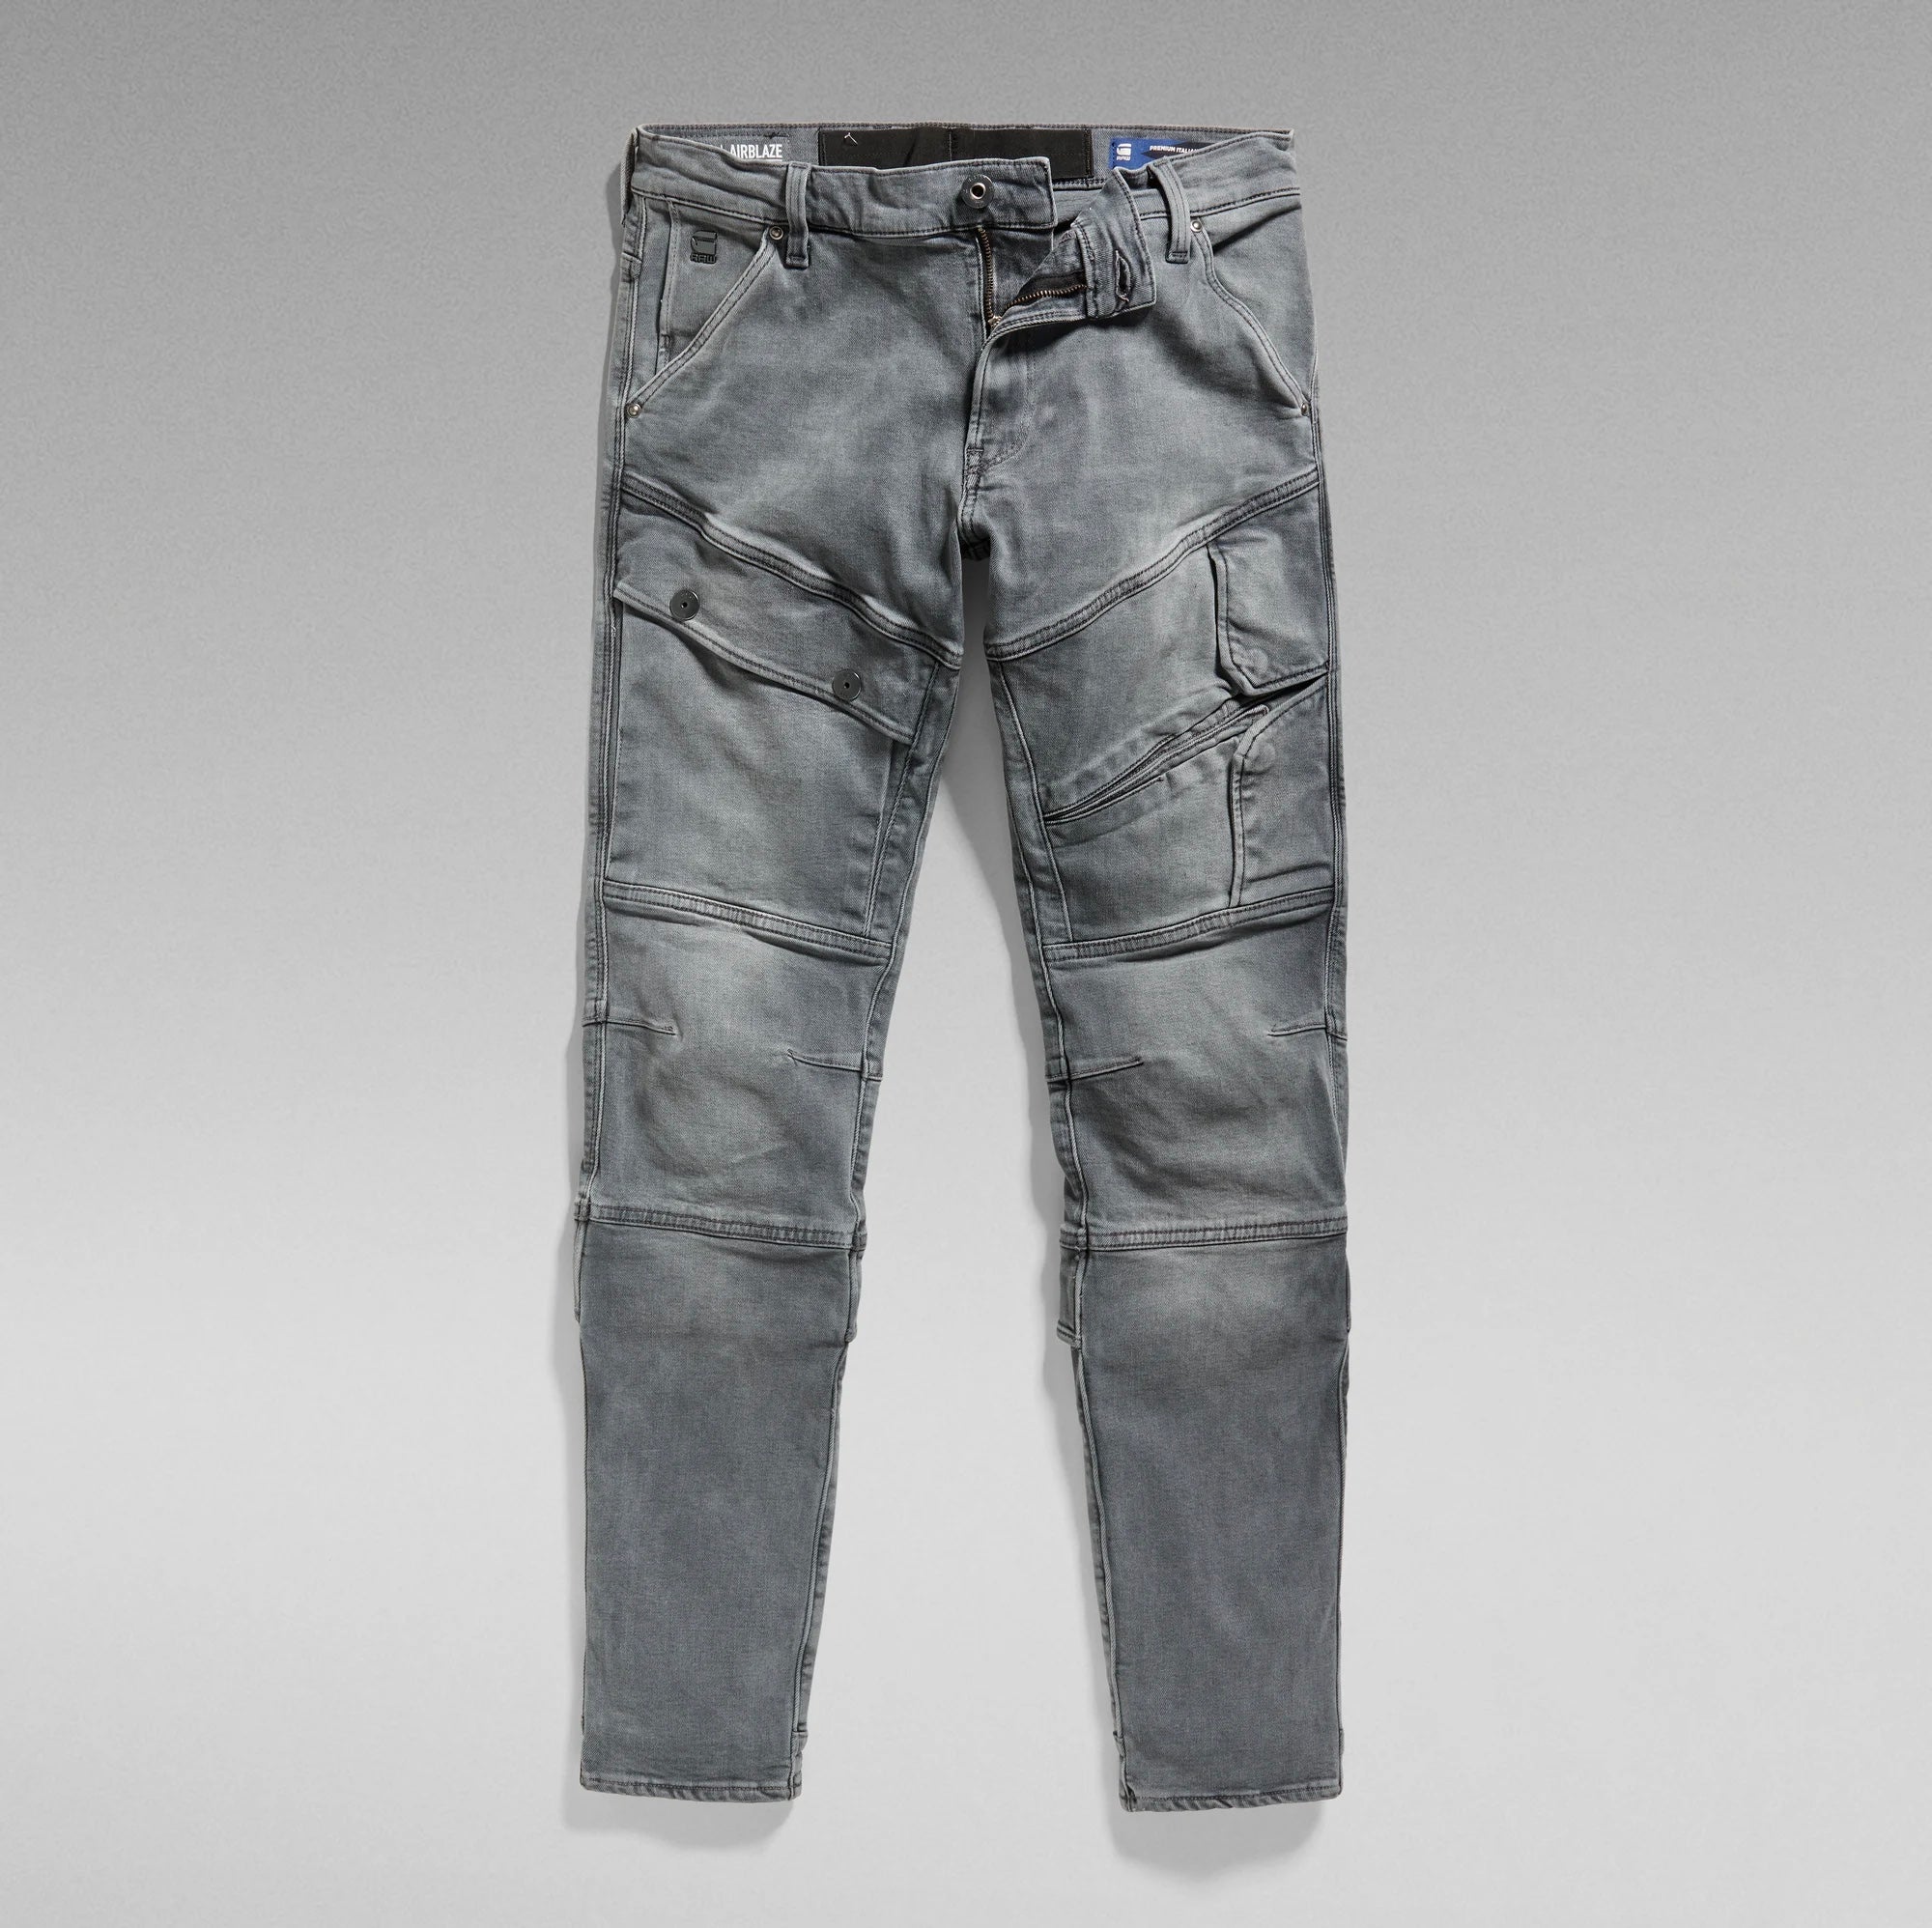 Airblaze 3D Skinny Jeans Sun Faded Moon Grey Italian Fabrics Sustainable Materials